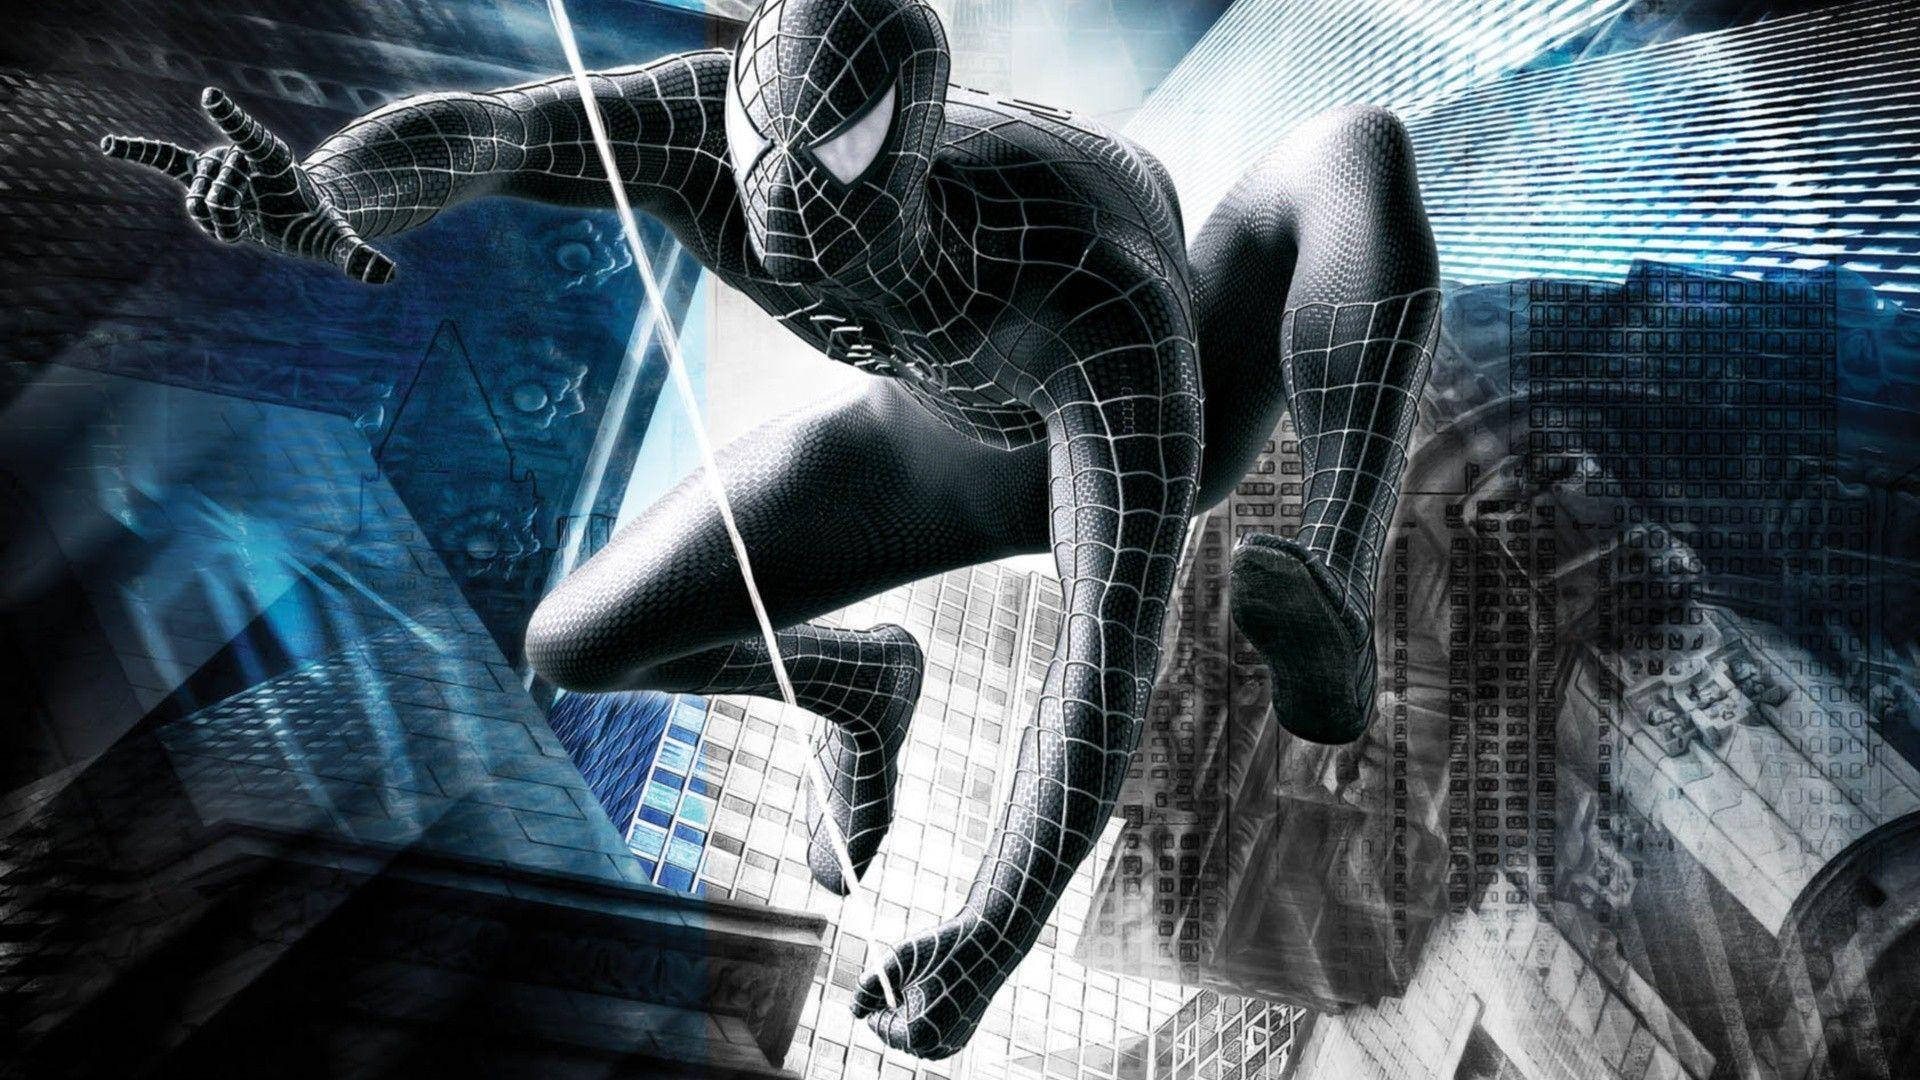 Black Spiderman Graphic Art Wallpaper